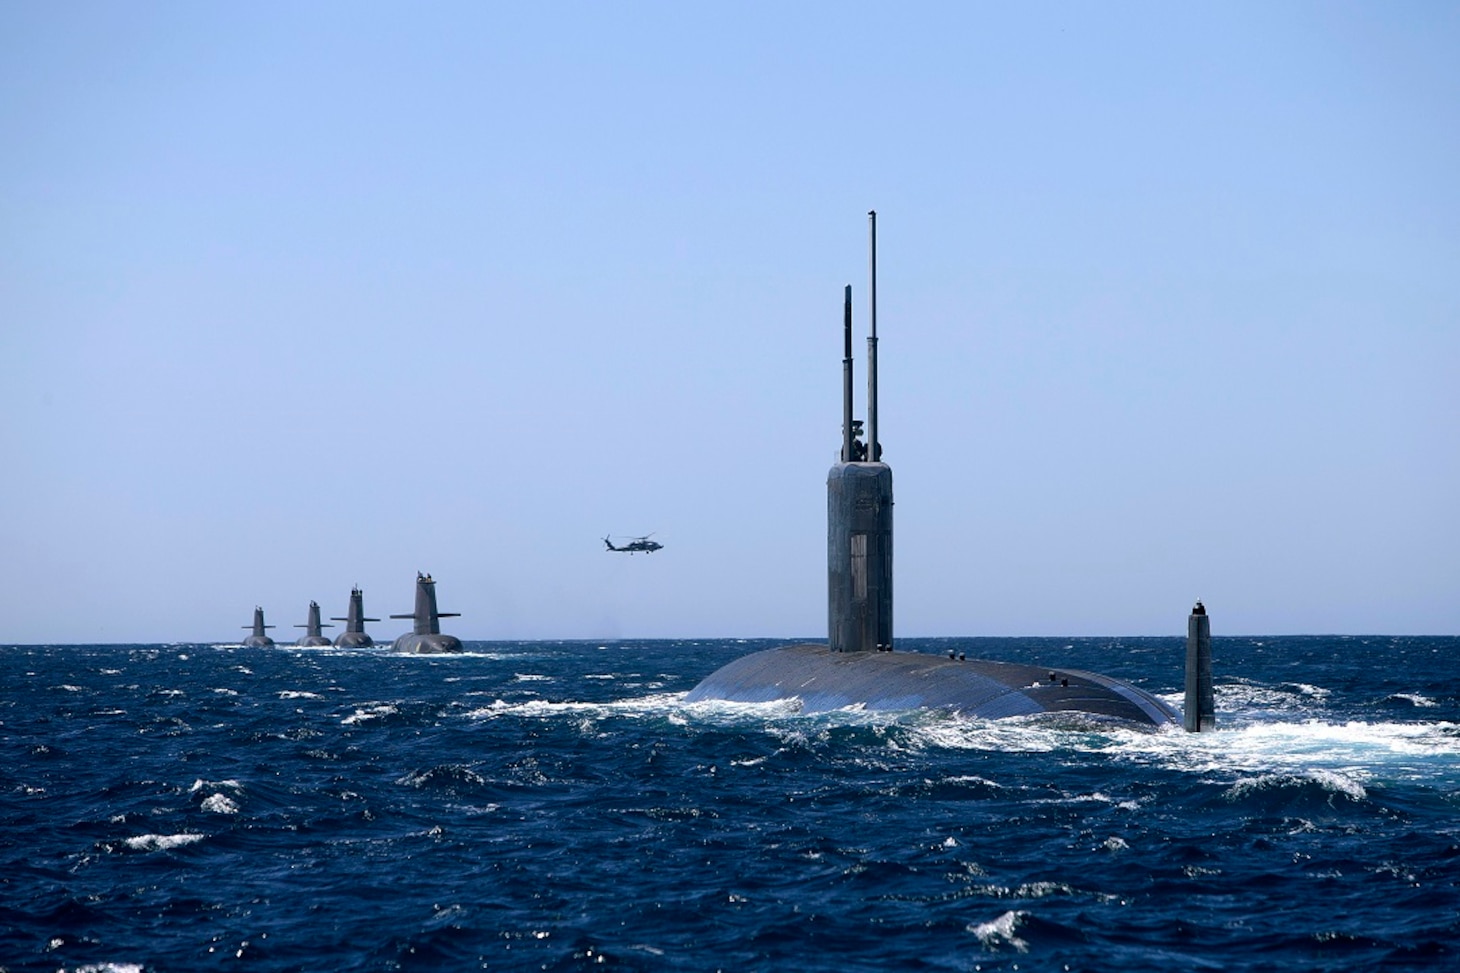 USS Santa Fe (SSN 763) joins Collins Class Submarines, HMAS Collins, HMAS Farncomb, HMAS Dechaineux and HMAS Sheean in formation while transiting through Cockburn Sound, Western Australia.